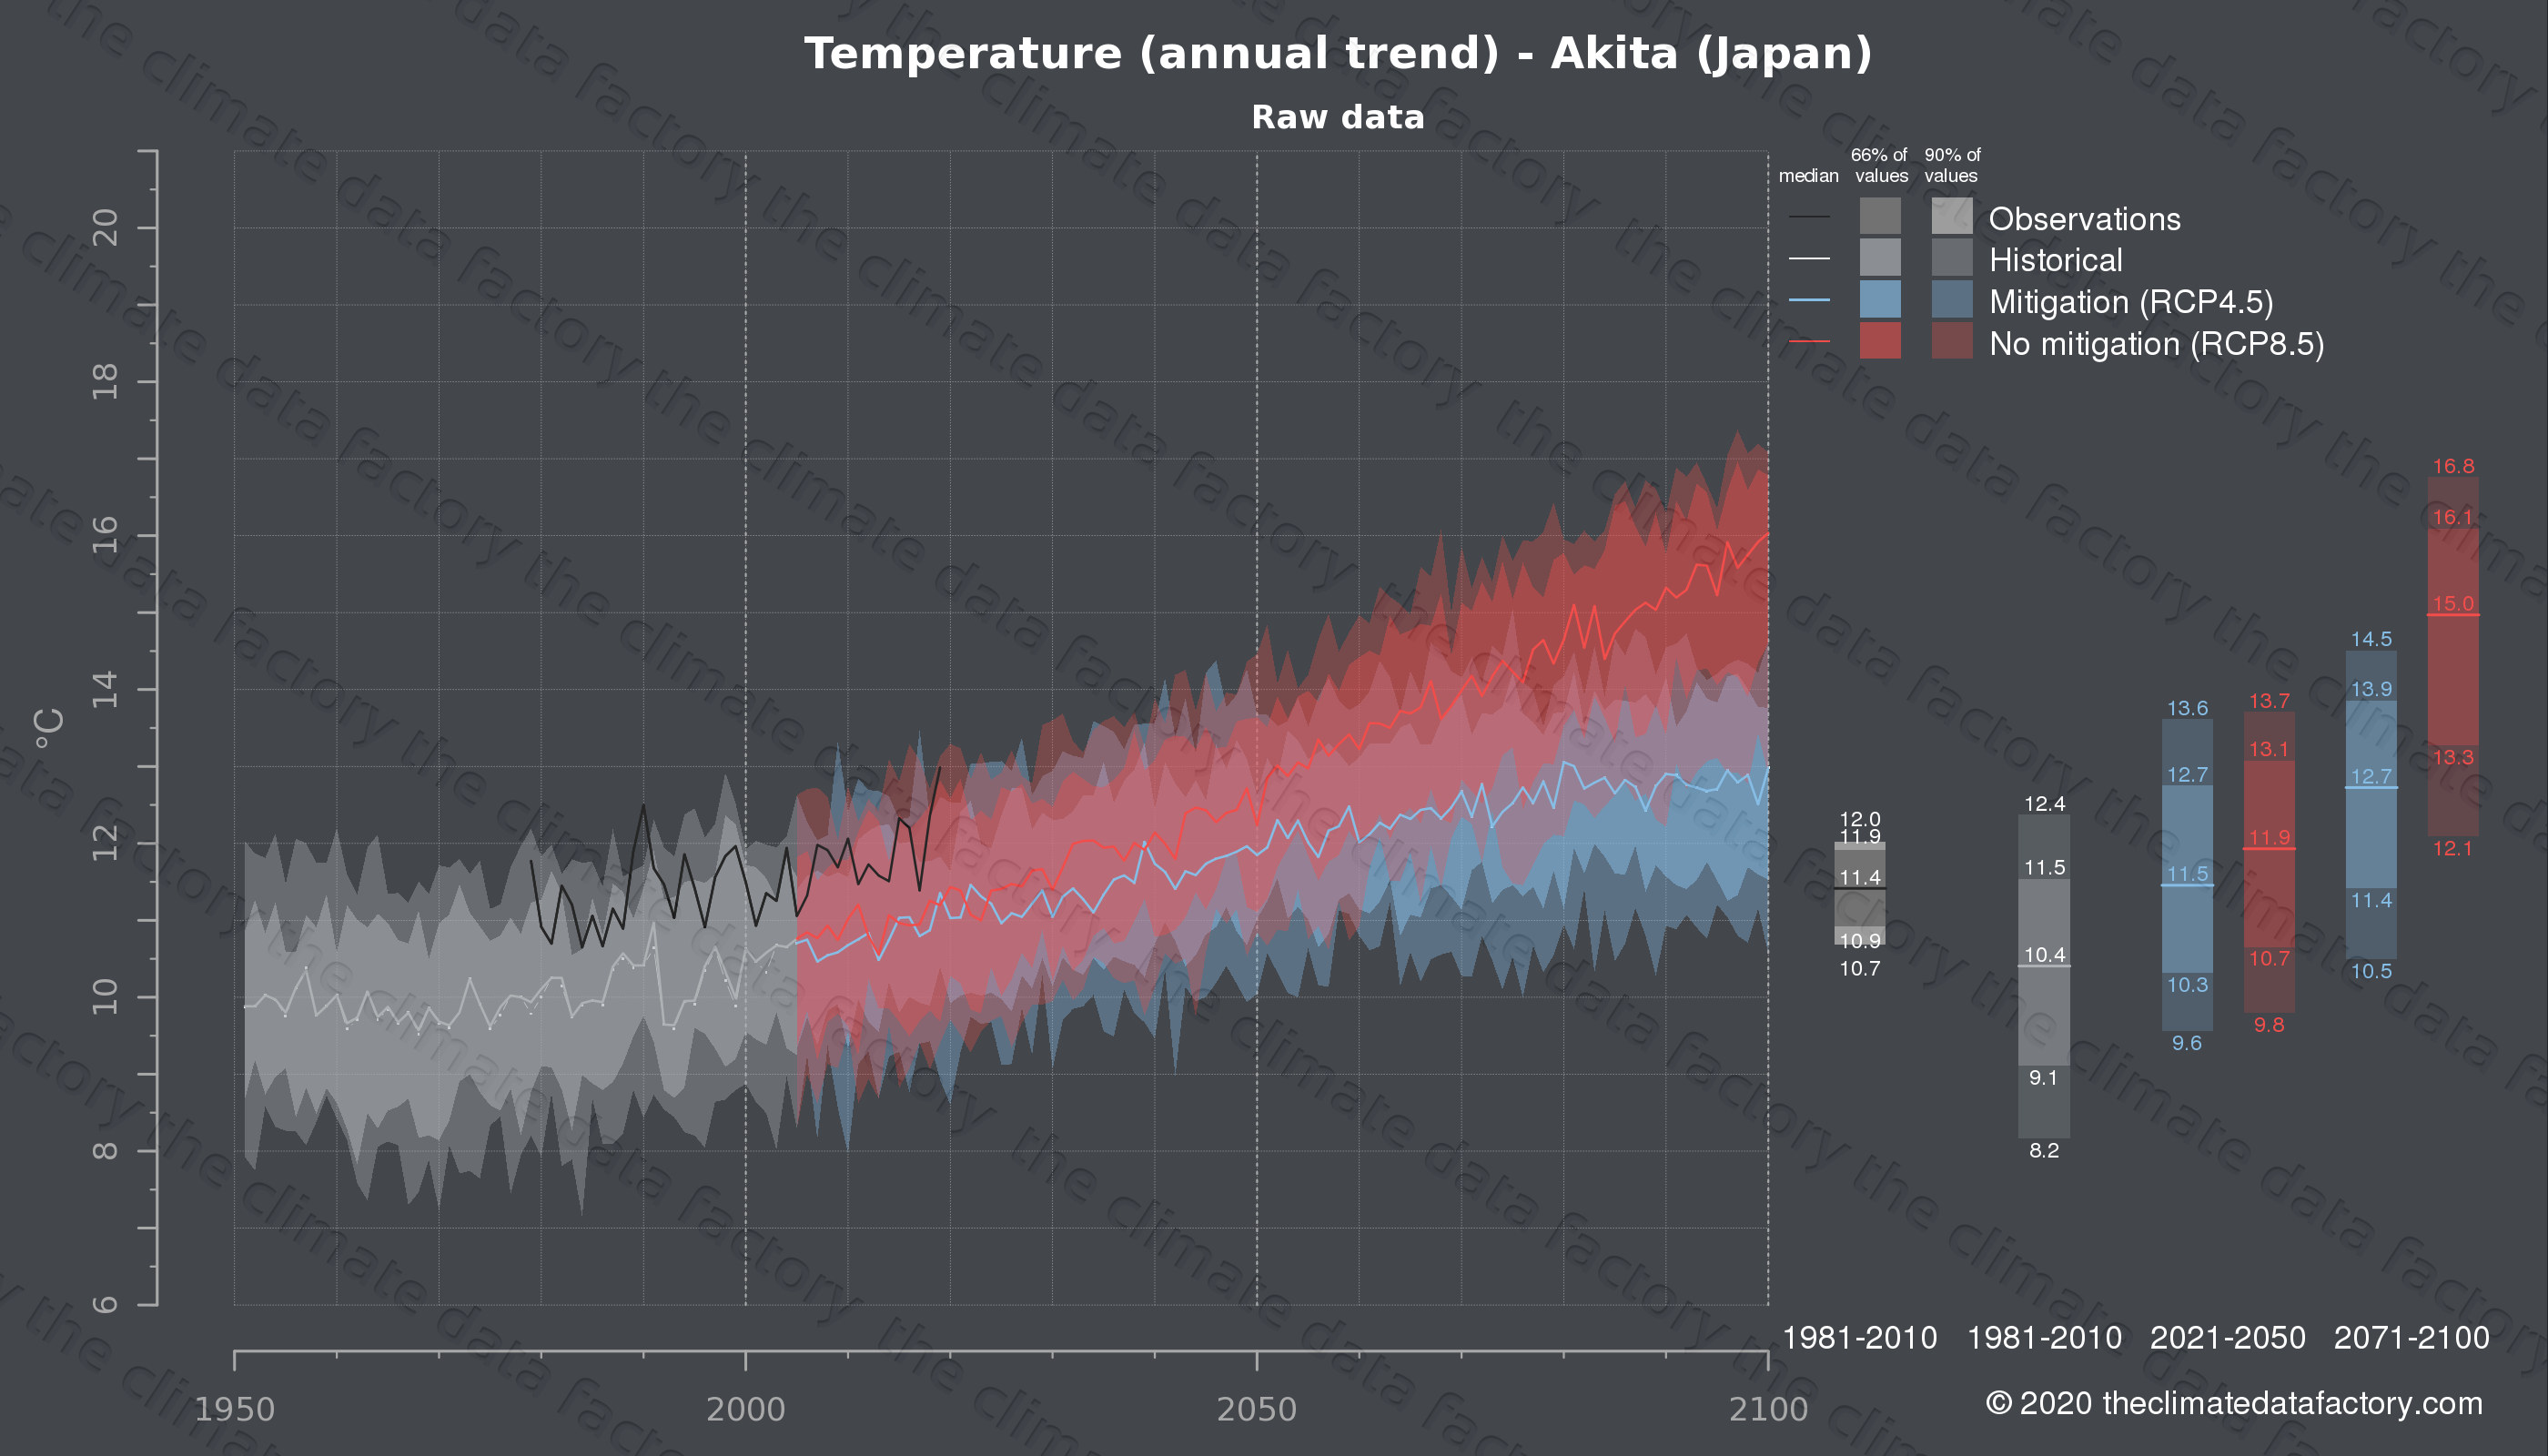 Temperature over Akita (Japan) | Climate change data download